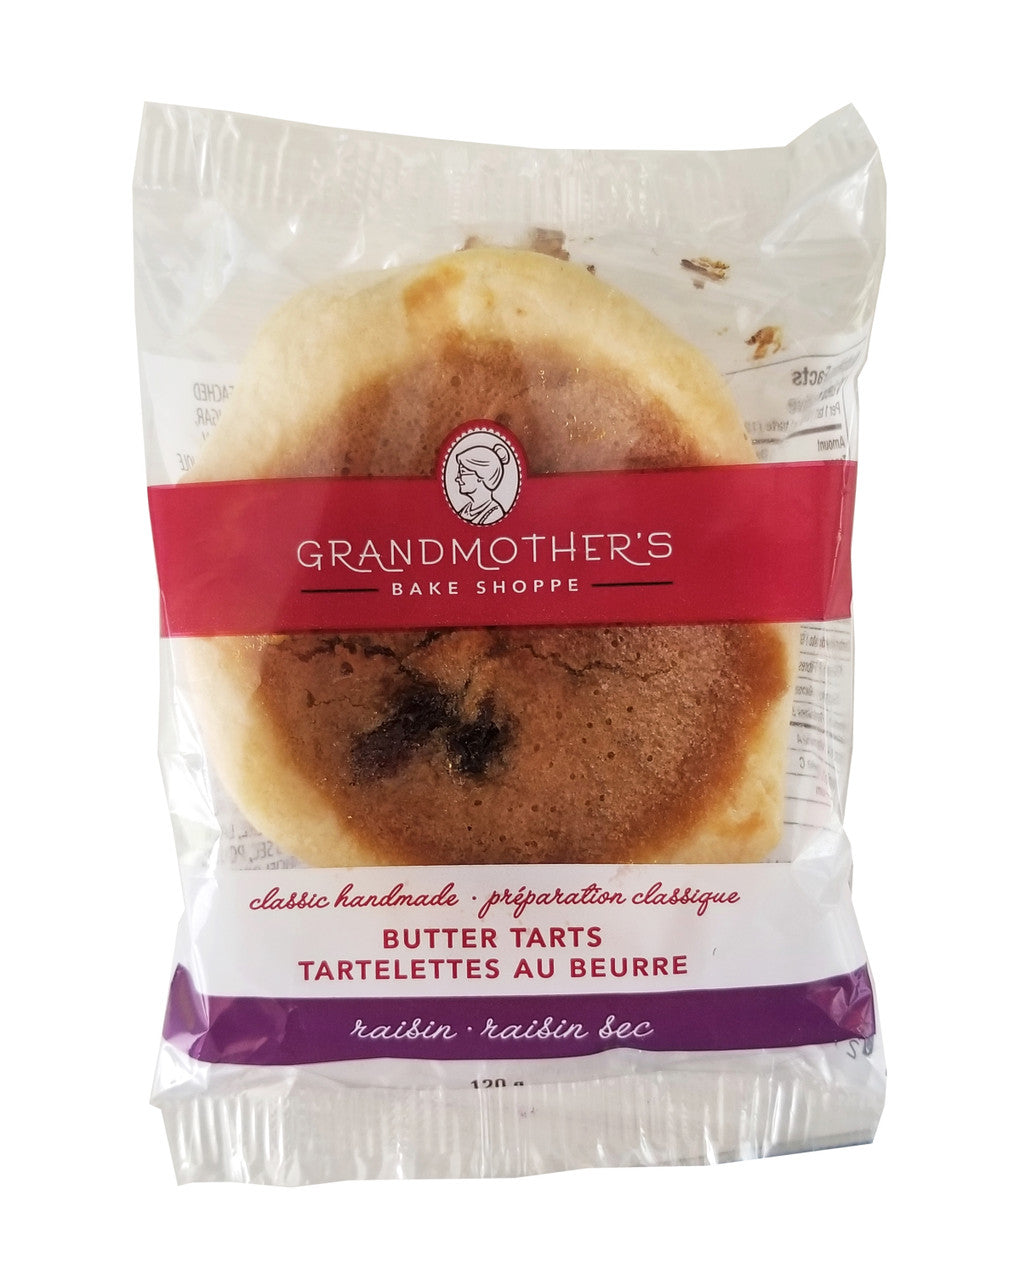 Grandmother's Bake Shoppe Raisin Butter Tarts, 120g/4.2 oz., 1 Tart {Imported from Canada}